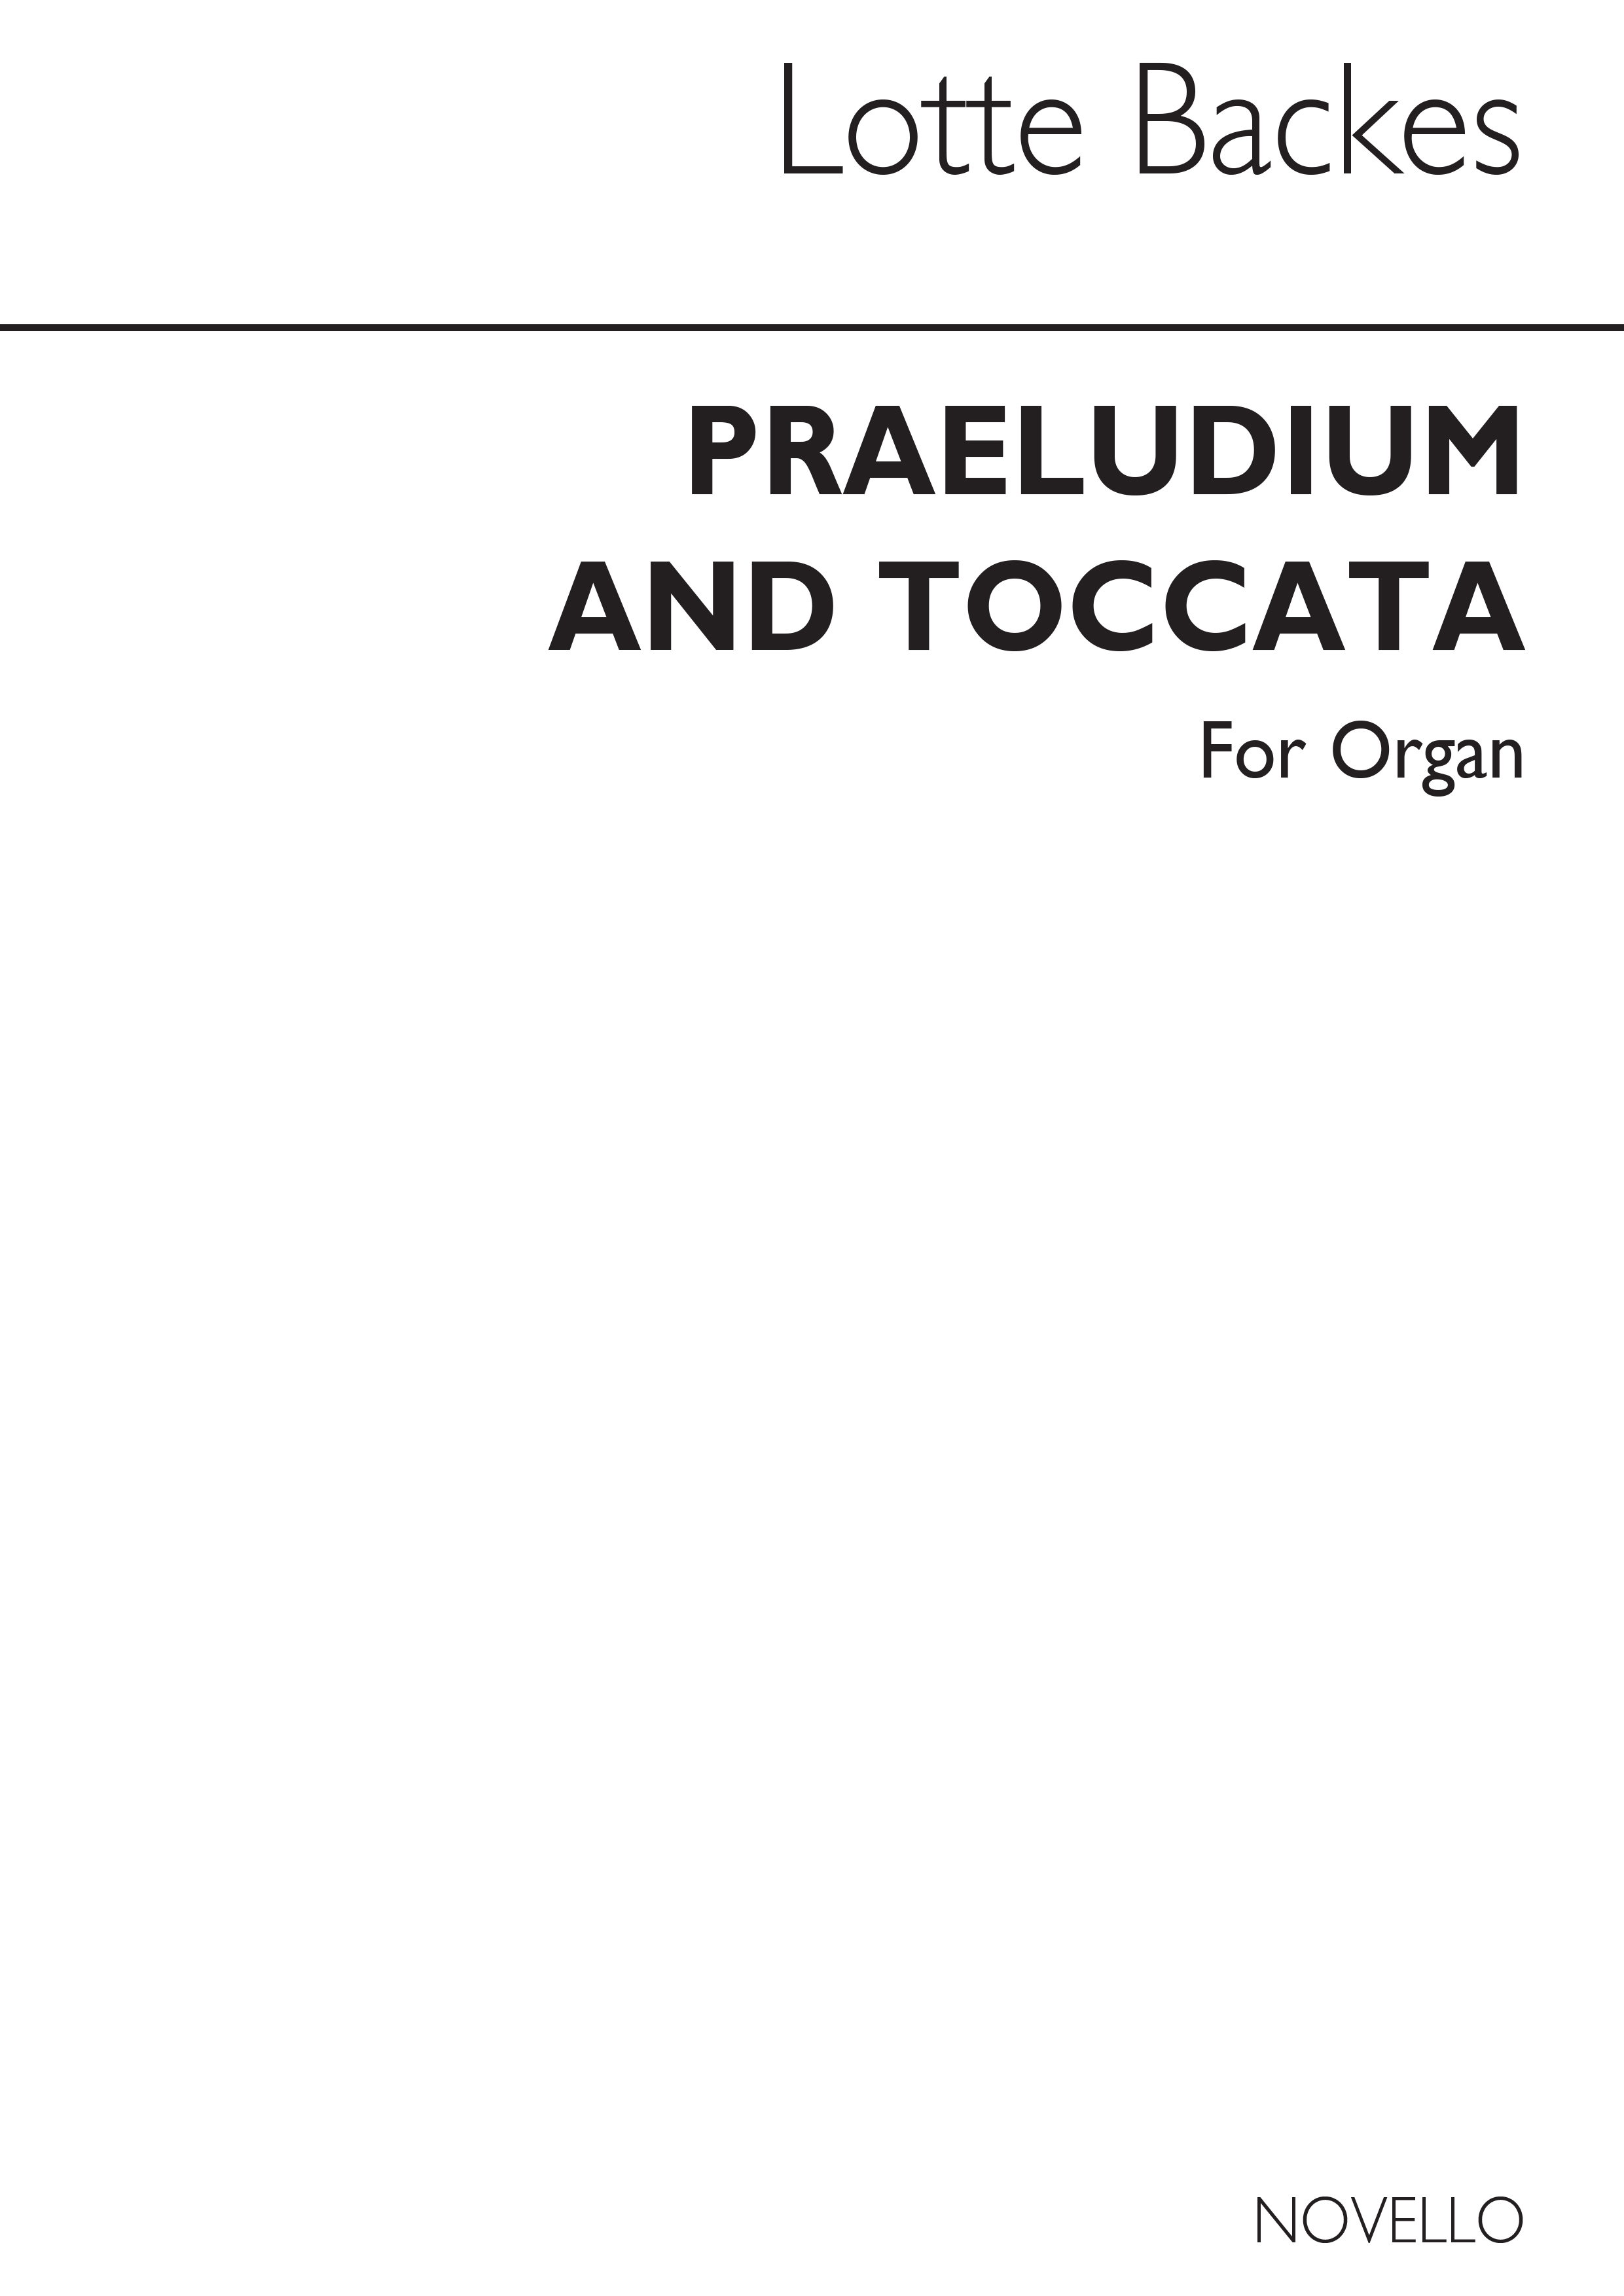 Lotte Backes: Praeludium And Toccata Organ